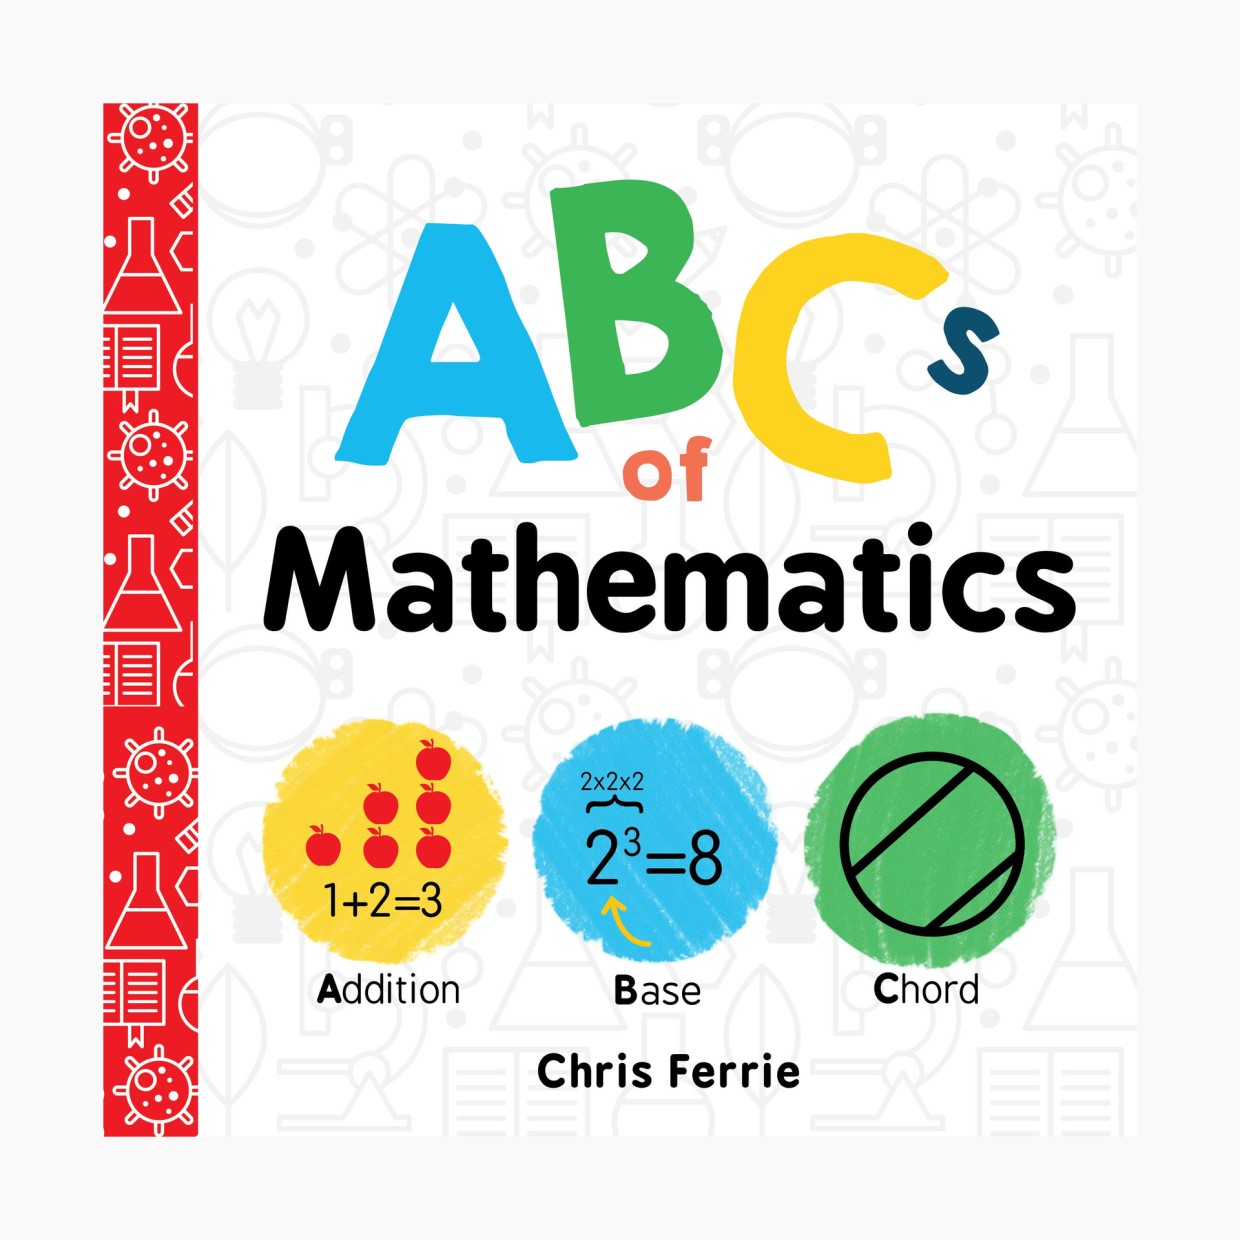 ABCs of Mathematics.